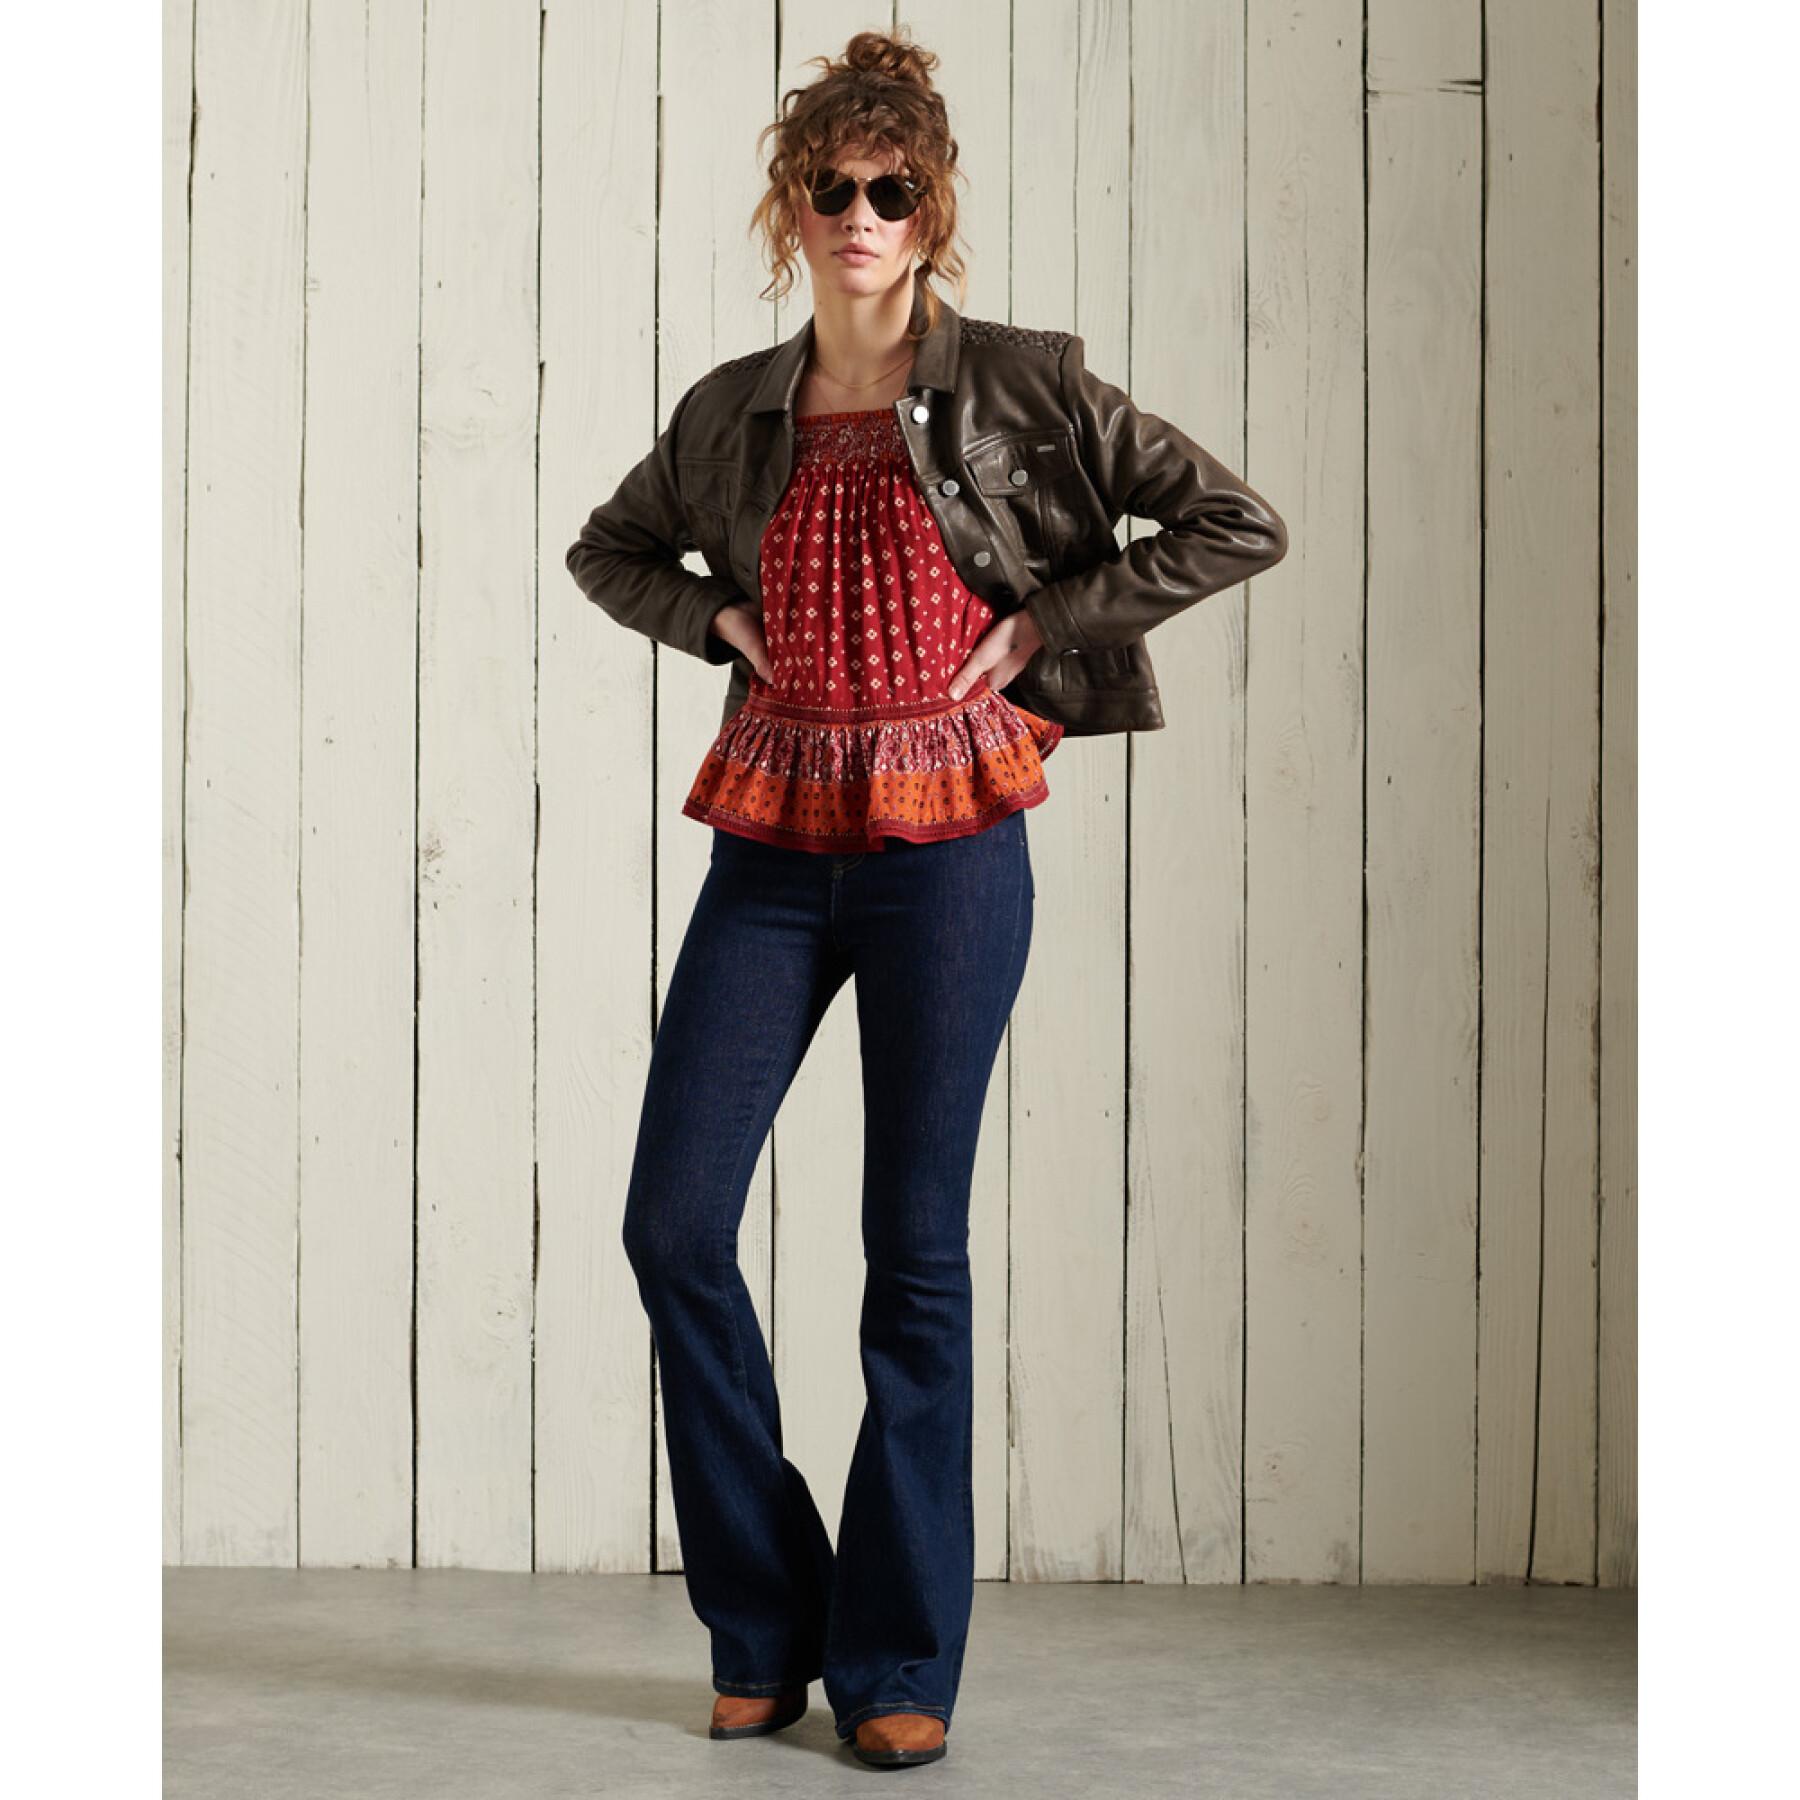 Leather trucker jacket for women Superdry Stateside